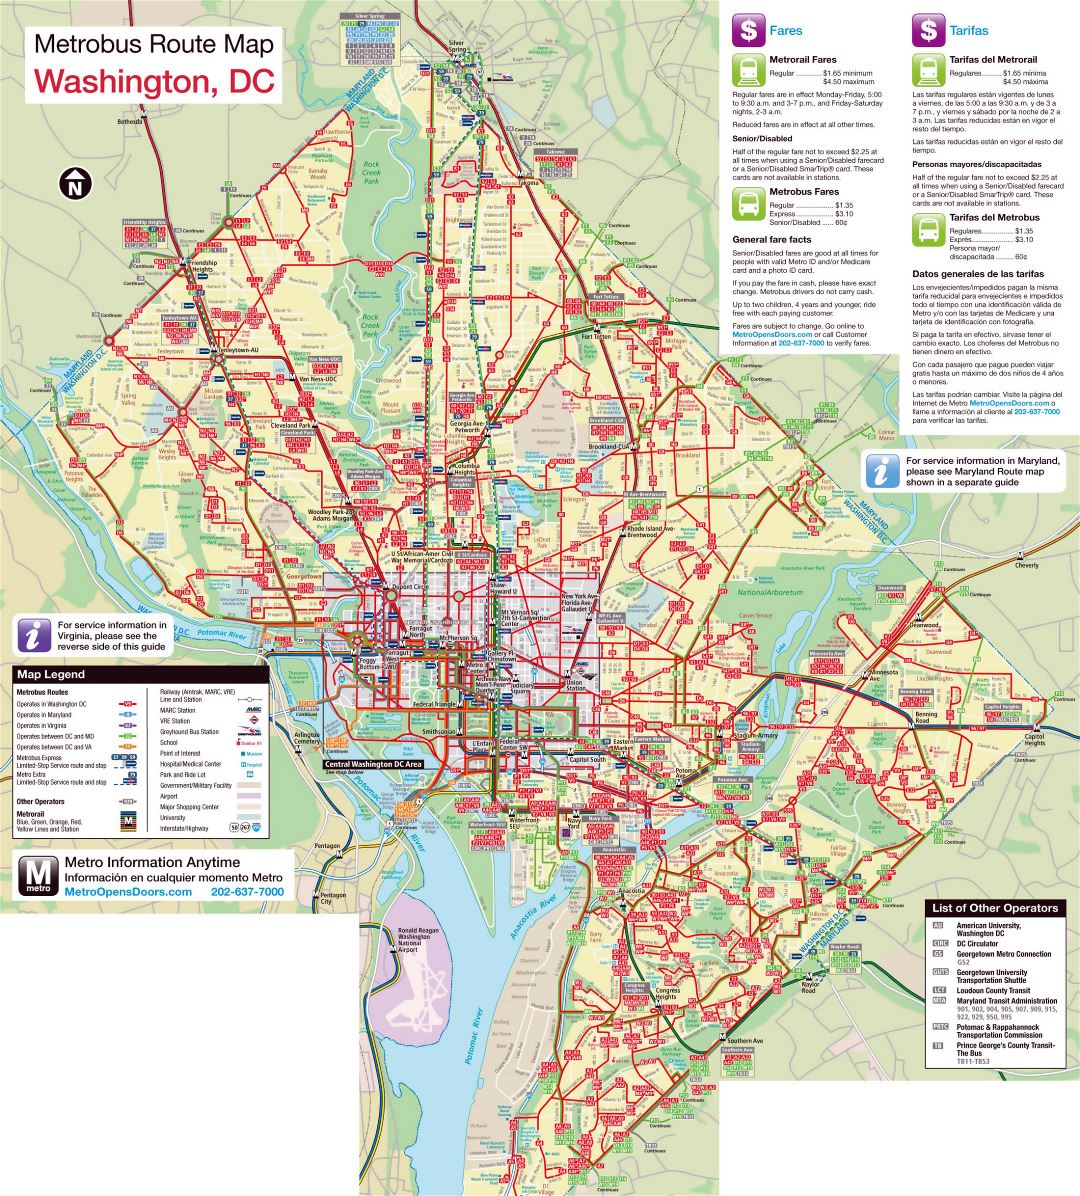 Large metrobus route map of Washington D.C.